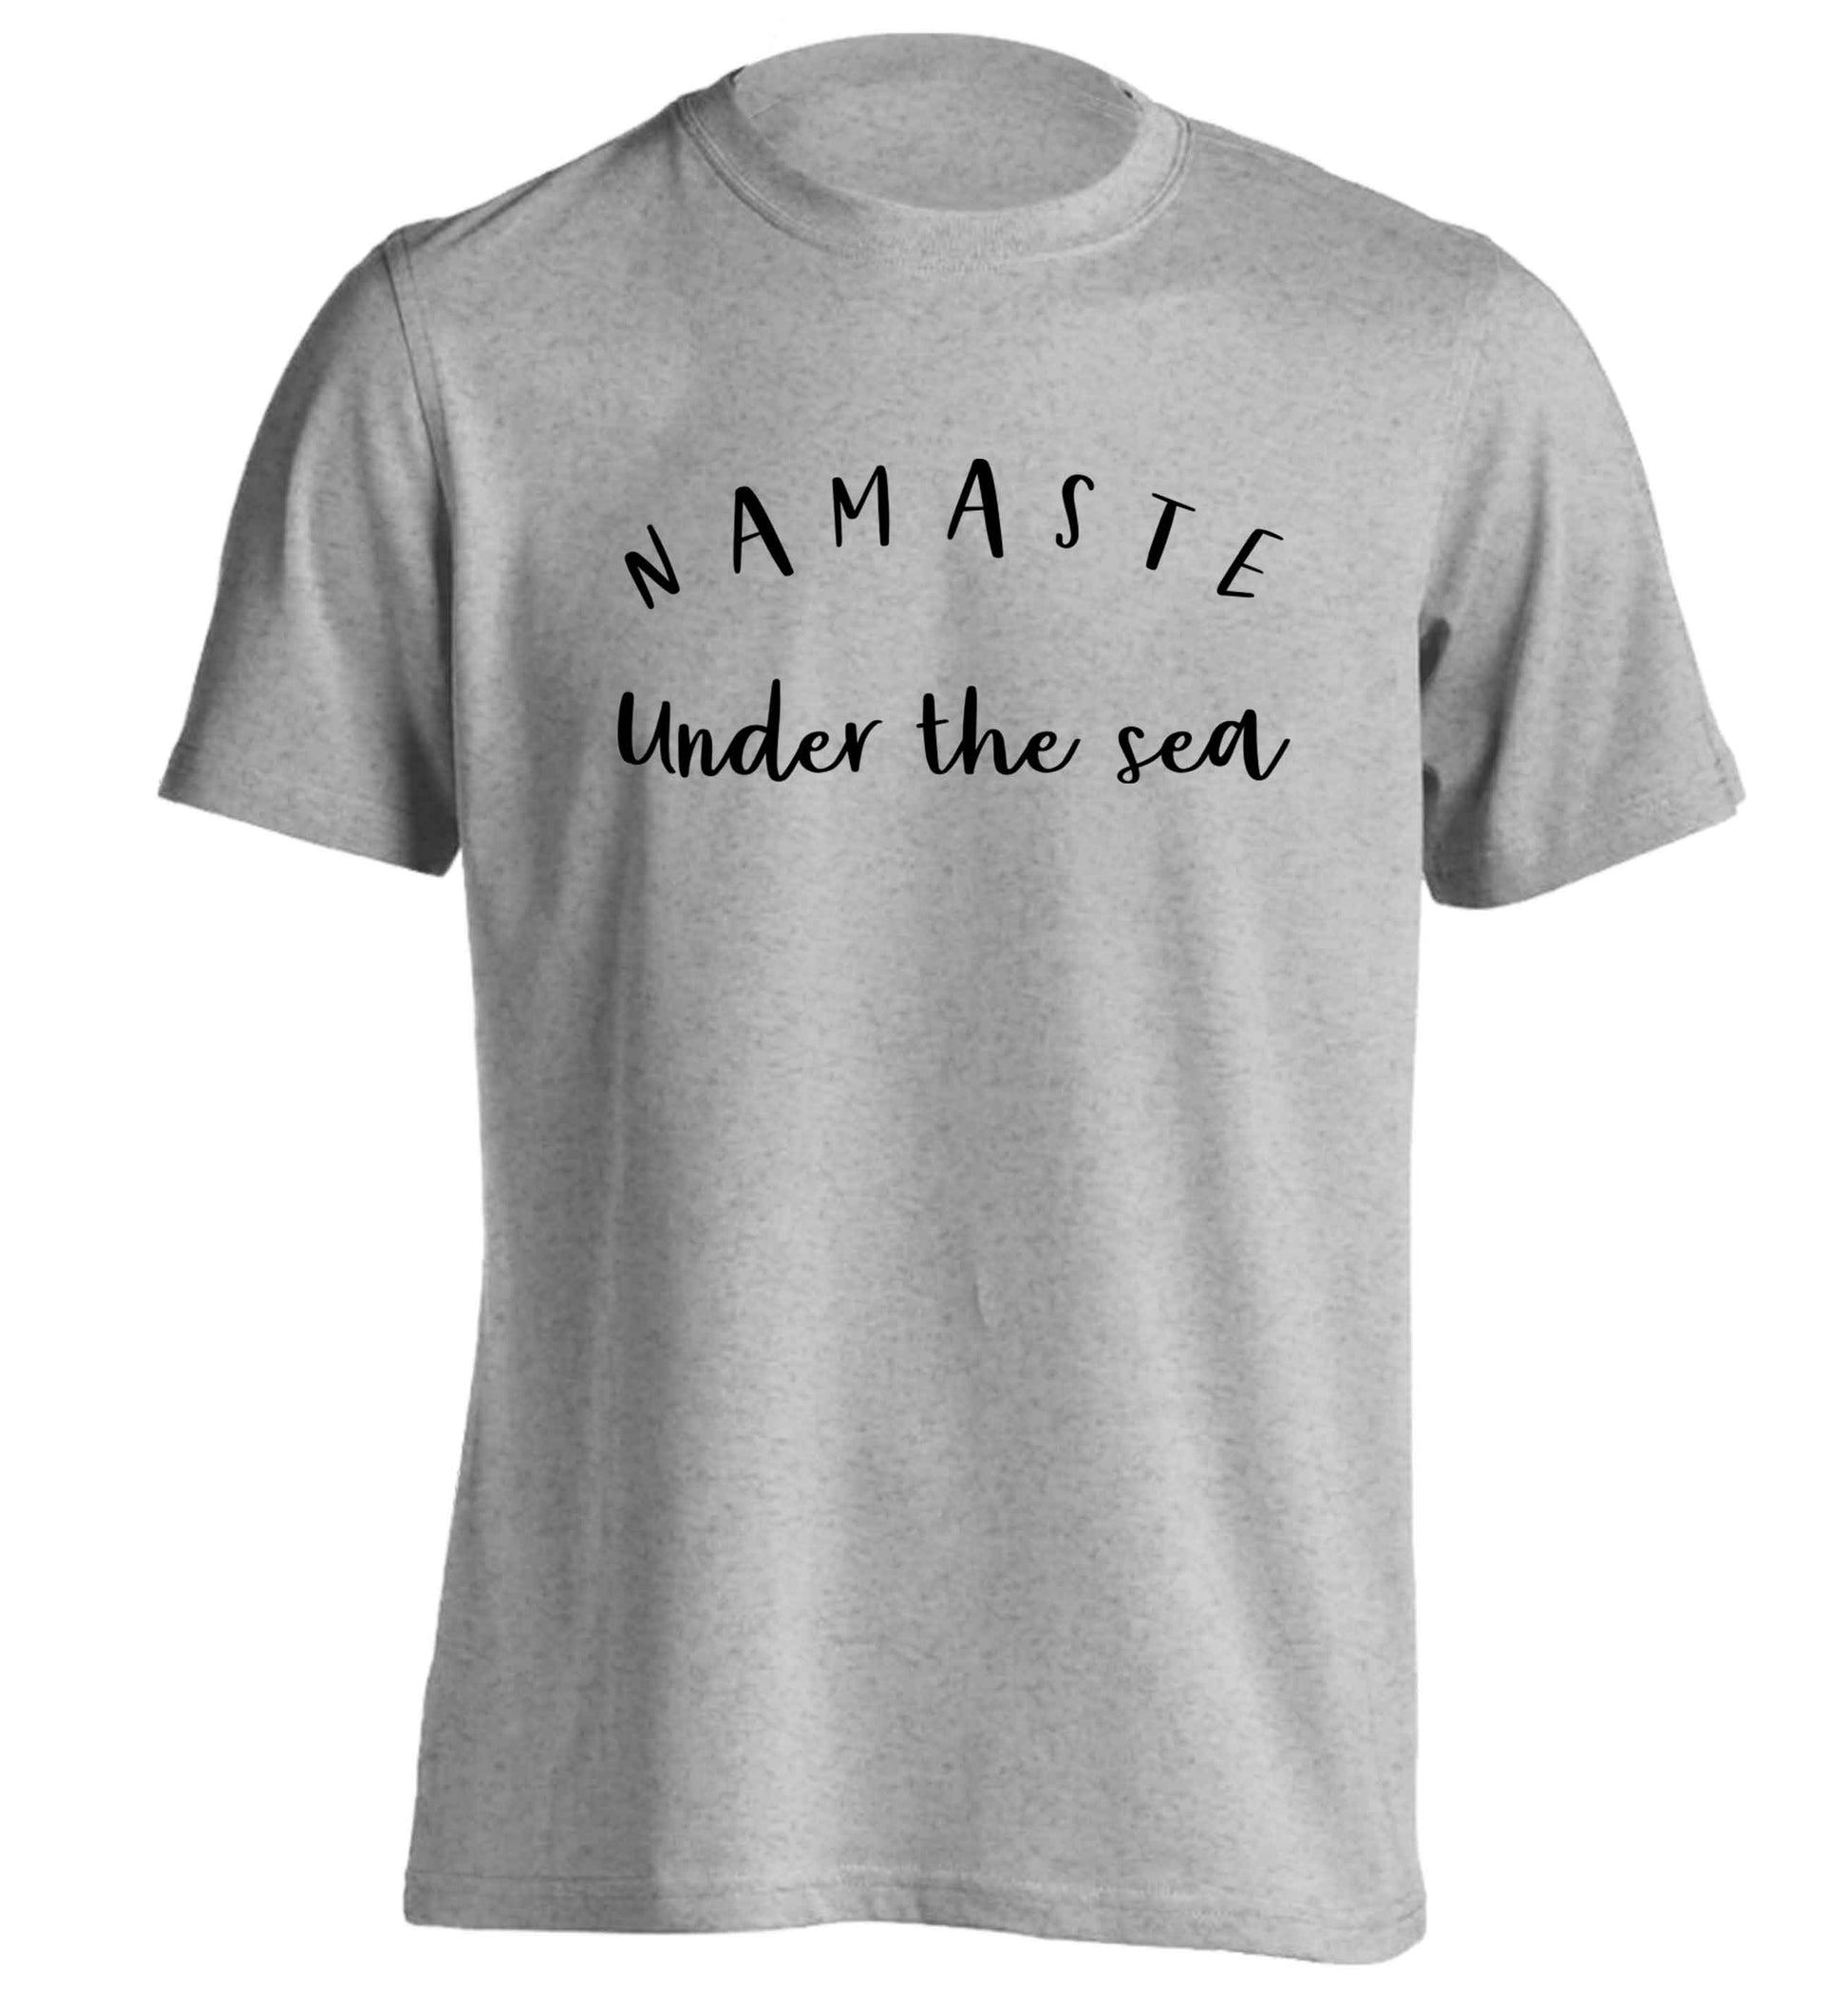 Namaste under the water adults unisex grey Tshirt 2XL